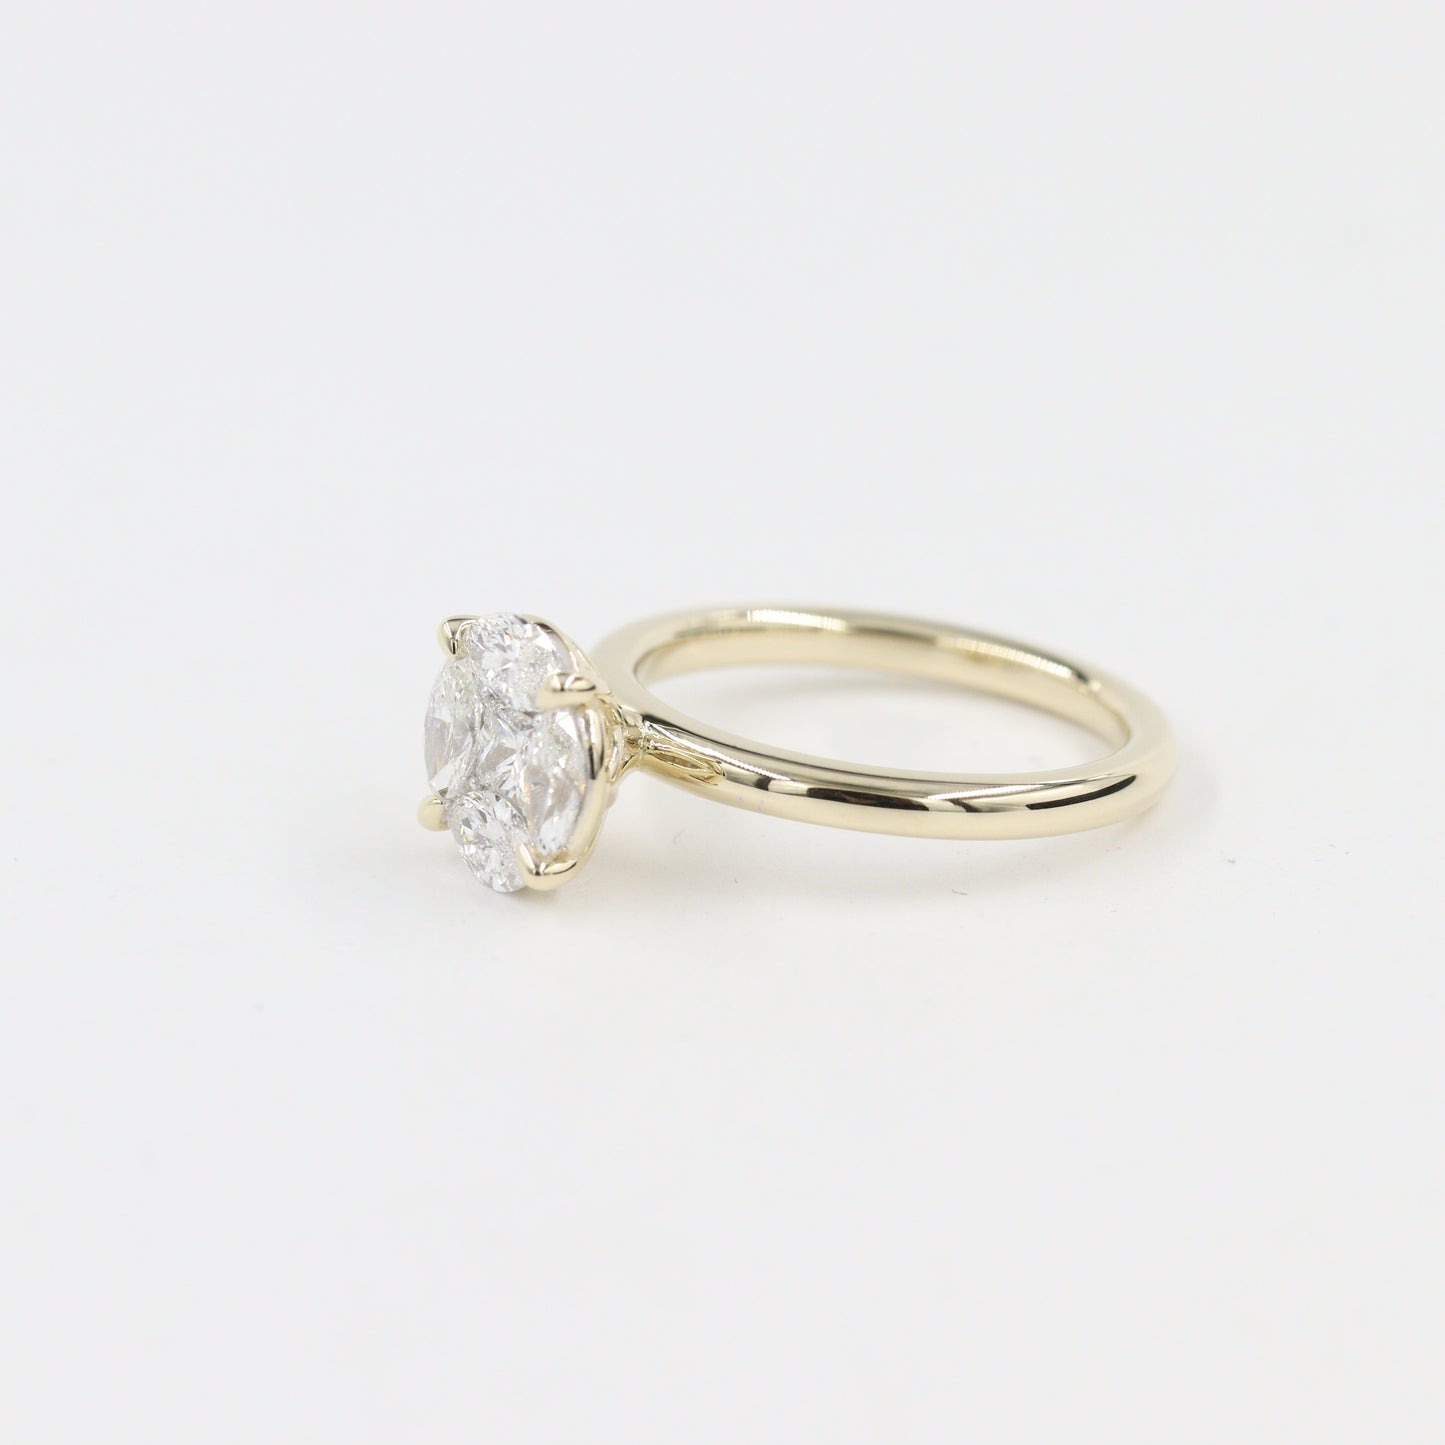 Unique Diamond Ring/ 1ct Center Diamond engagement Ring/9.3mm Actual Total 1ct Center Diamond Ring/Anniversary ring/Stackable Diamond Ring